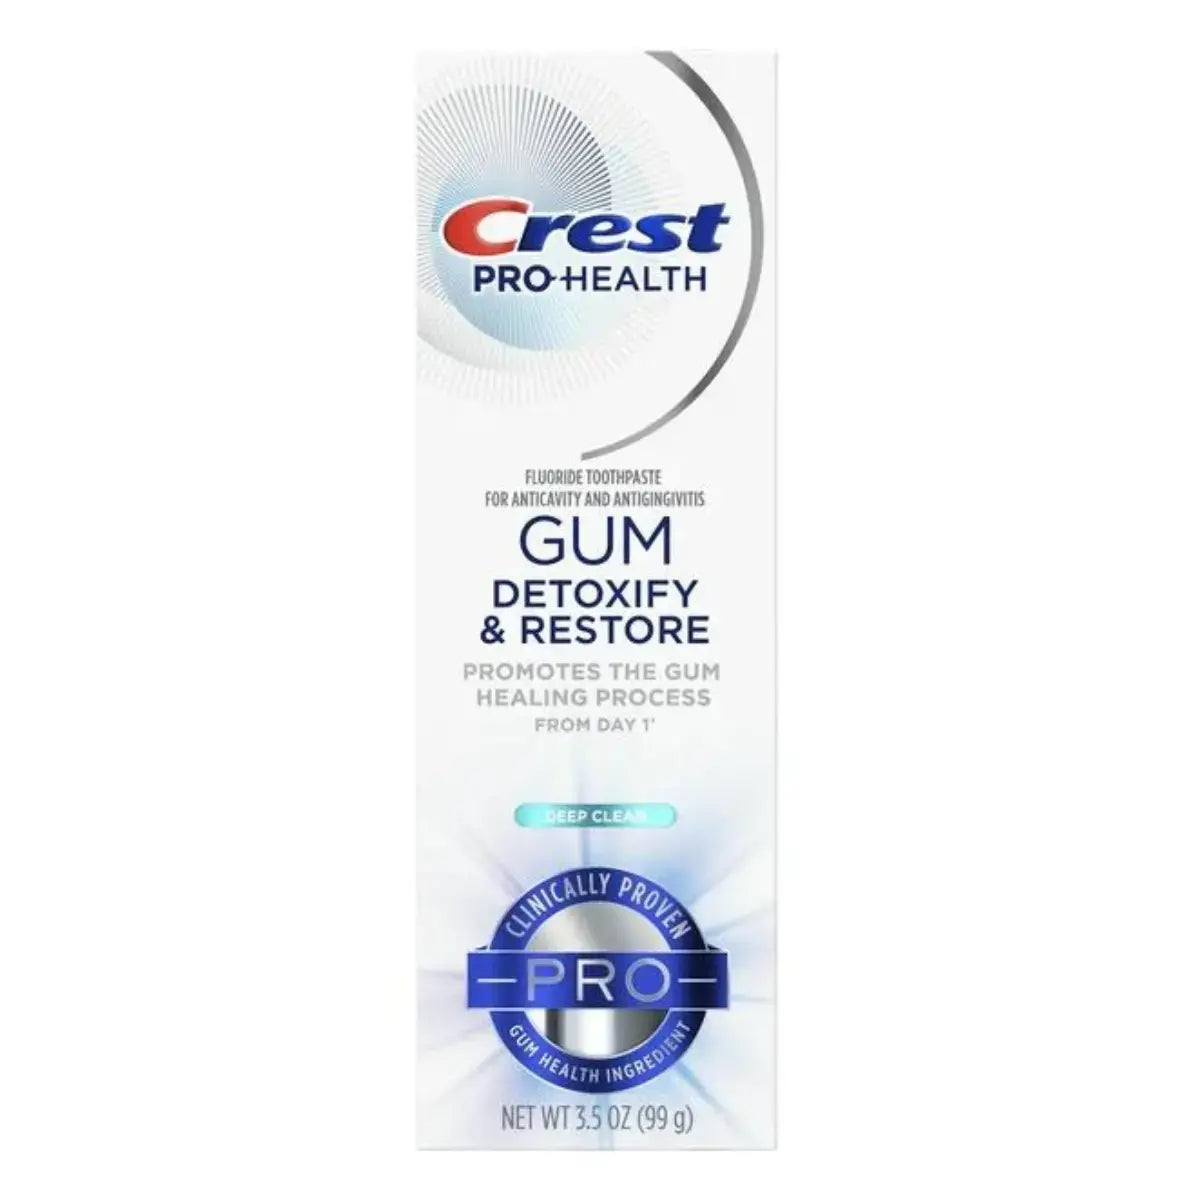 Tandpasta Crest Pro+Health Gum Detoxify and Restore Deep Clean Pro 99g